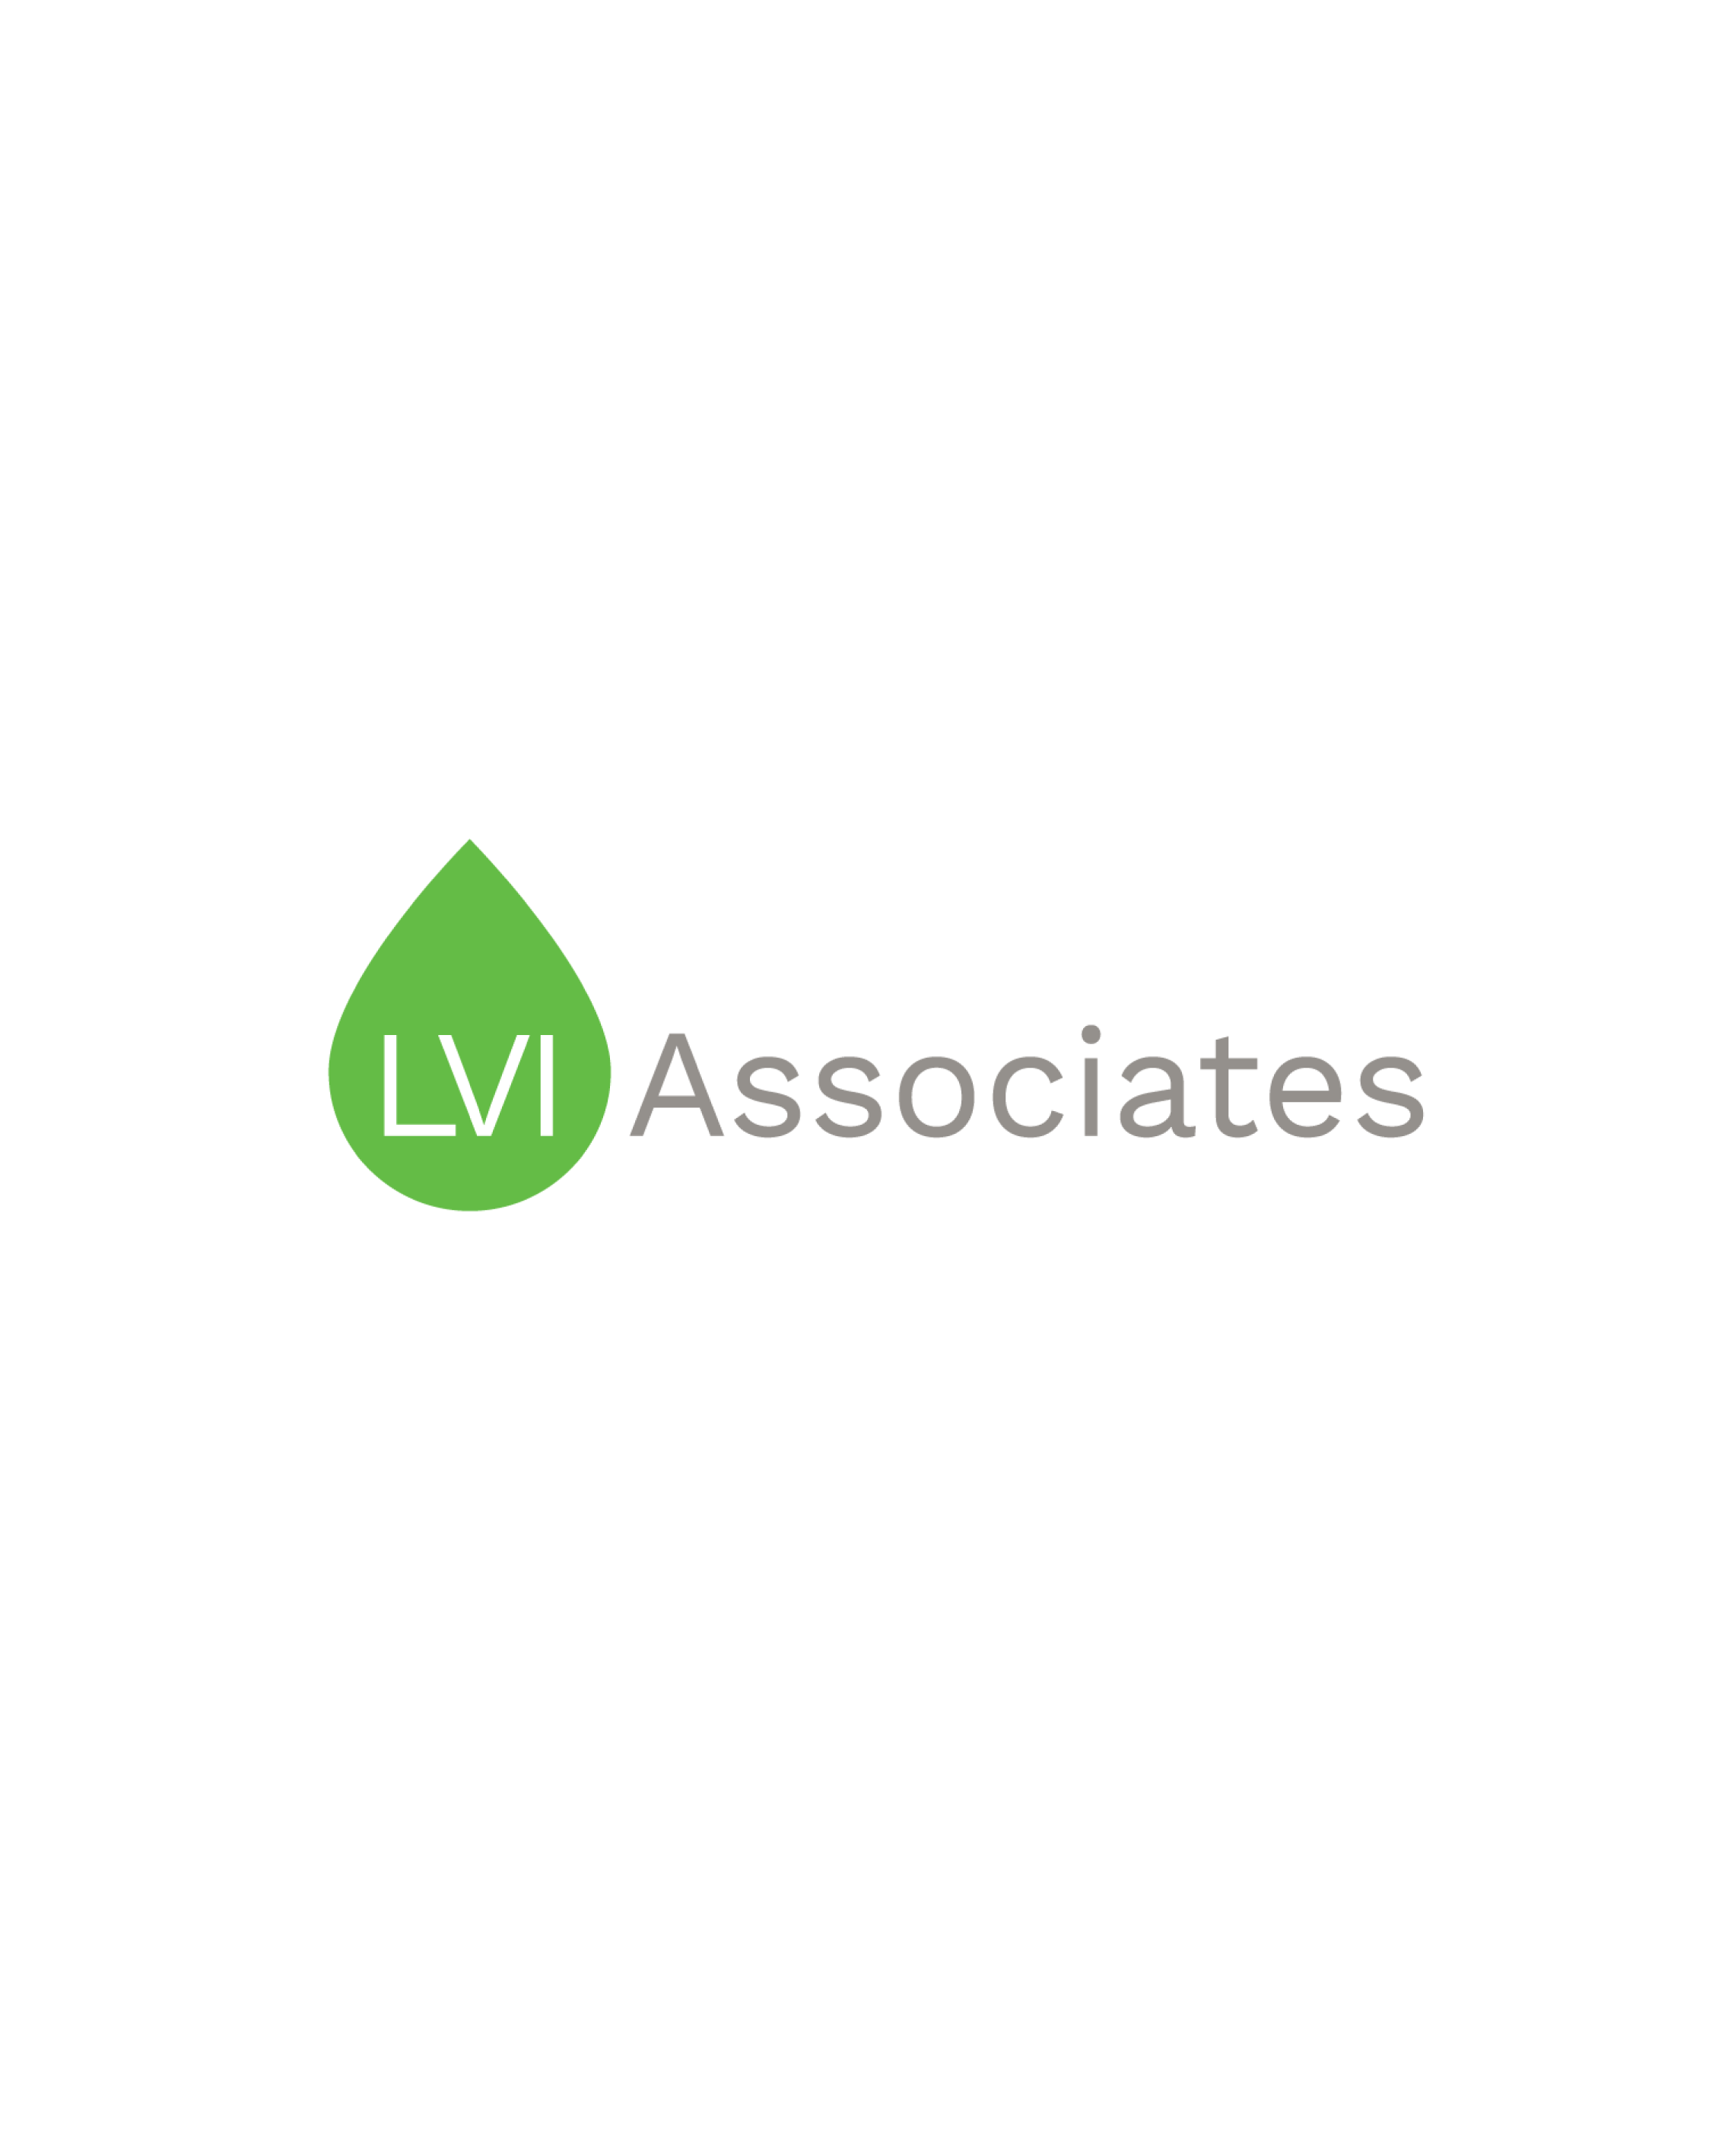 LVI Associates 